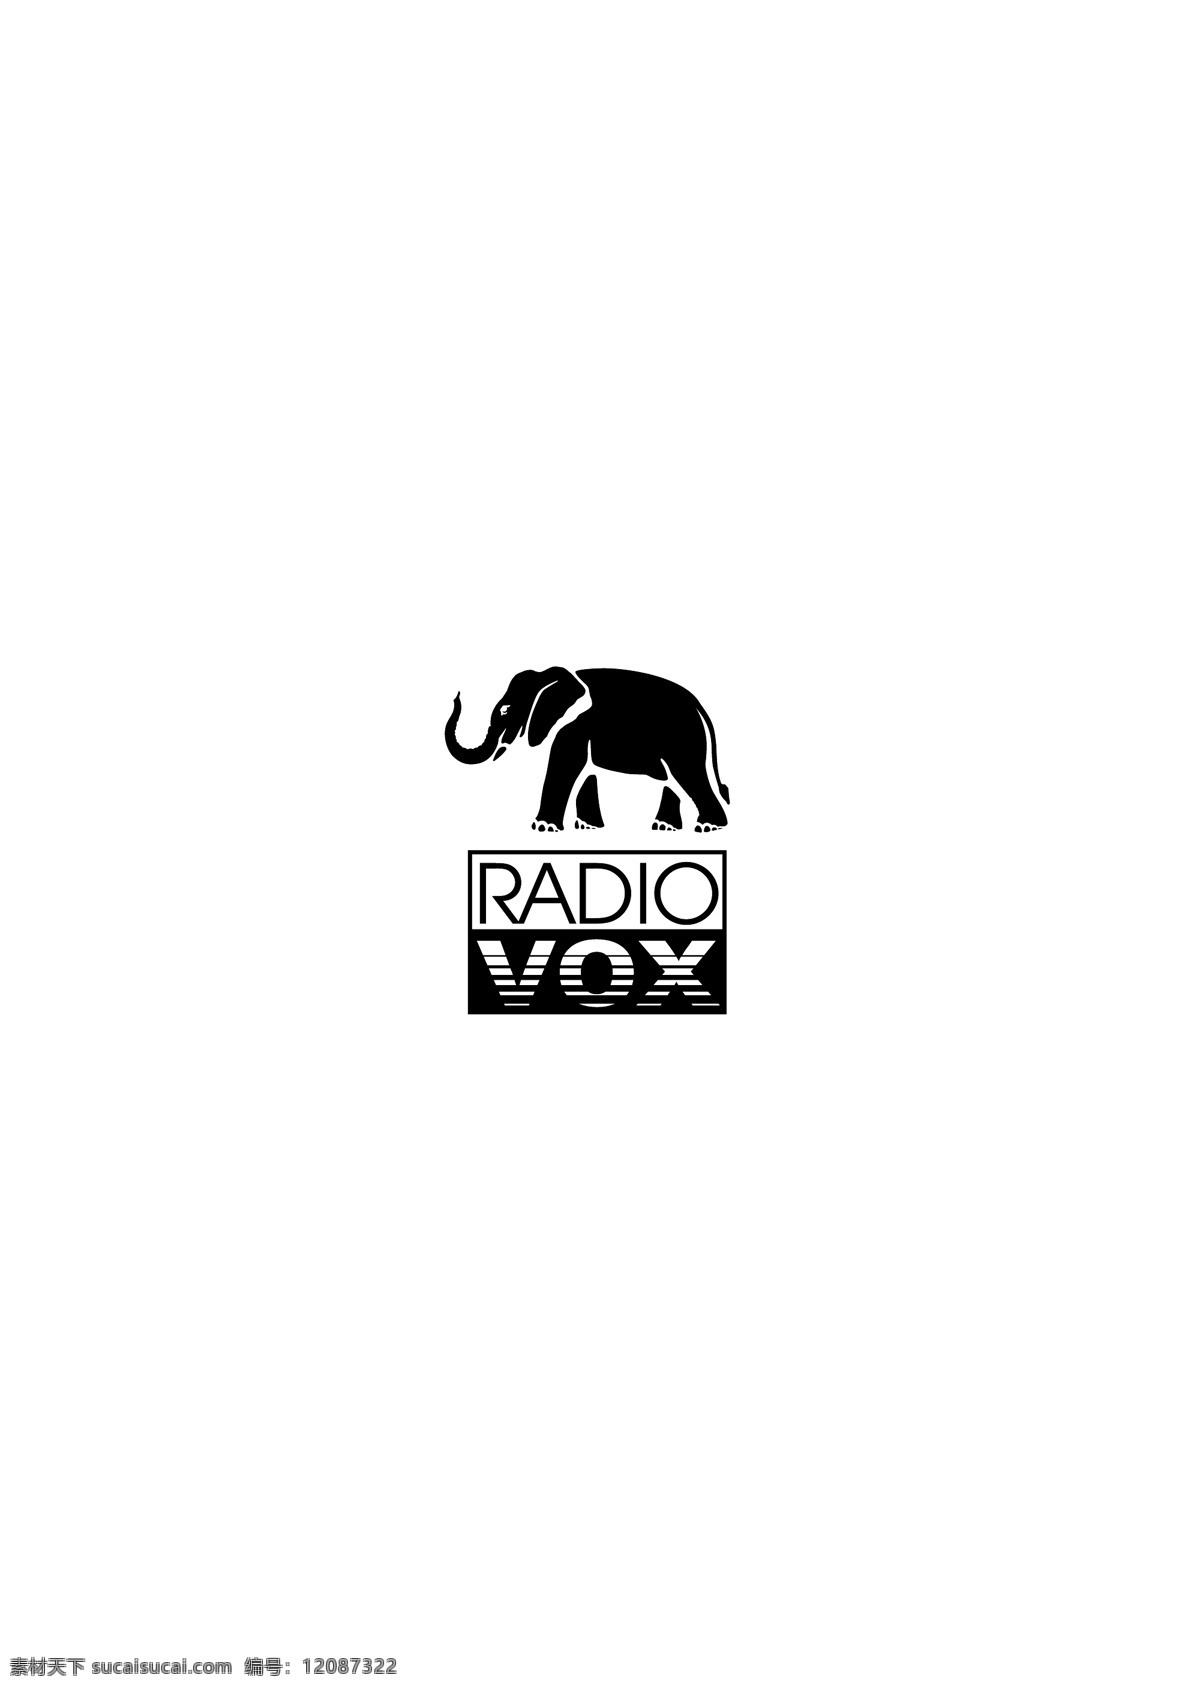 radio logo大全 logo 设计欣赏 商业矢量 矢量下载 vox 标志设计 欣赏 网页矢量 矢量图 其他矢量图